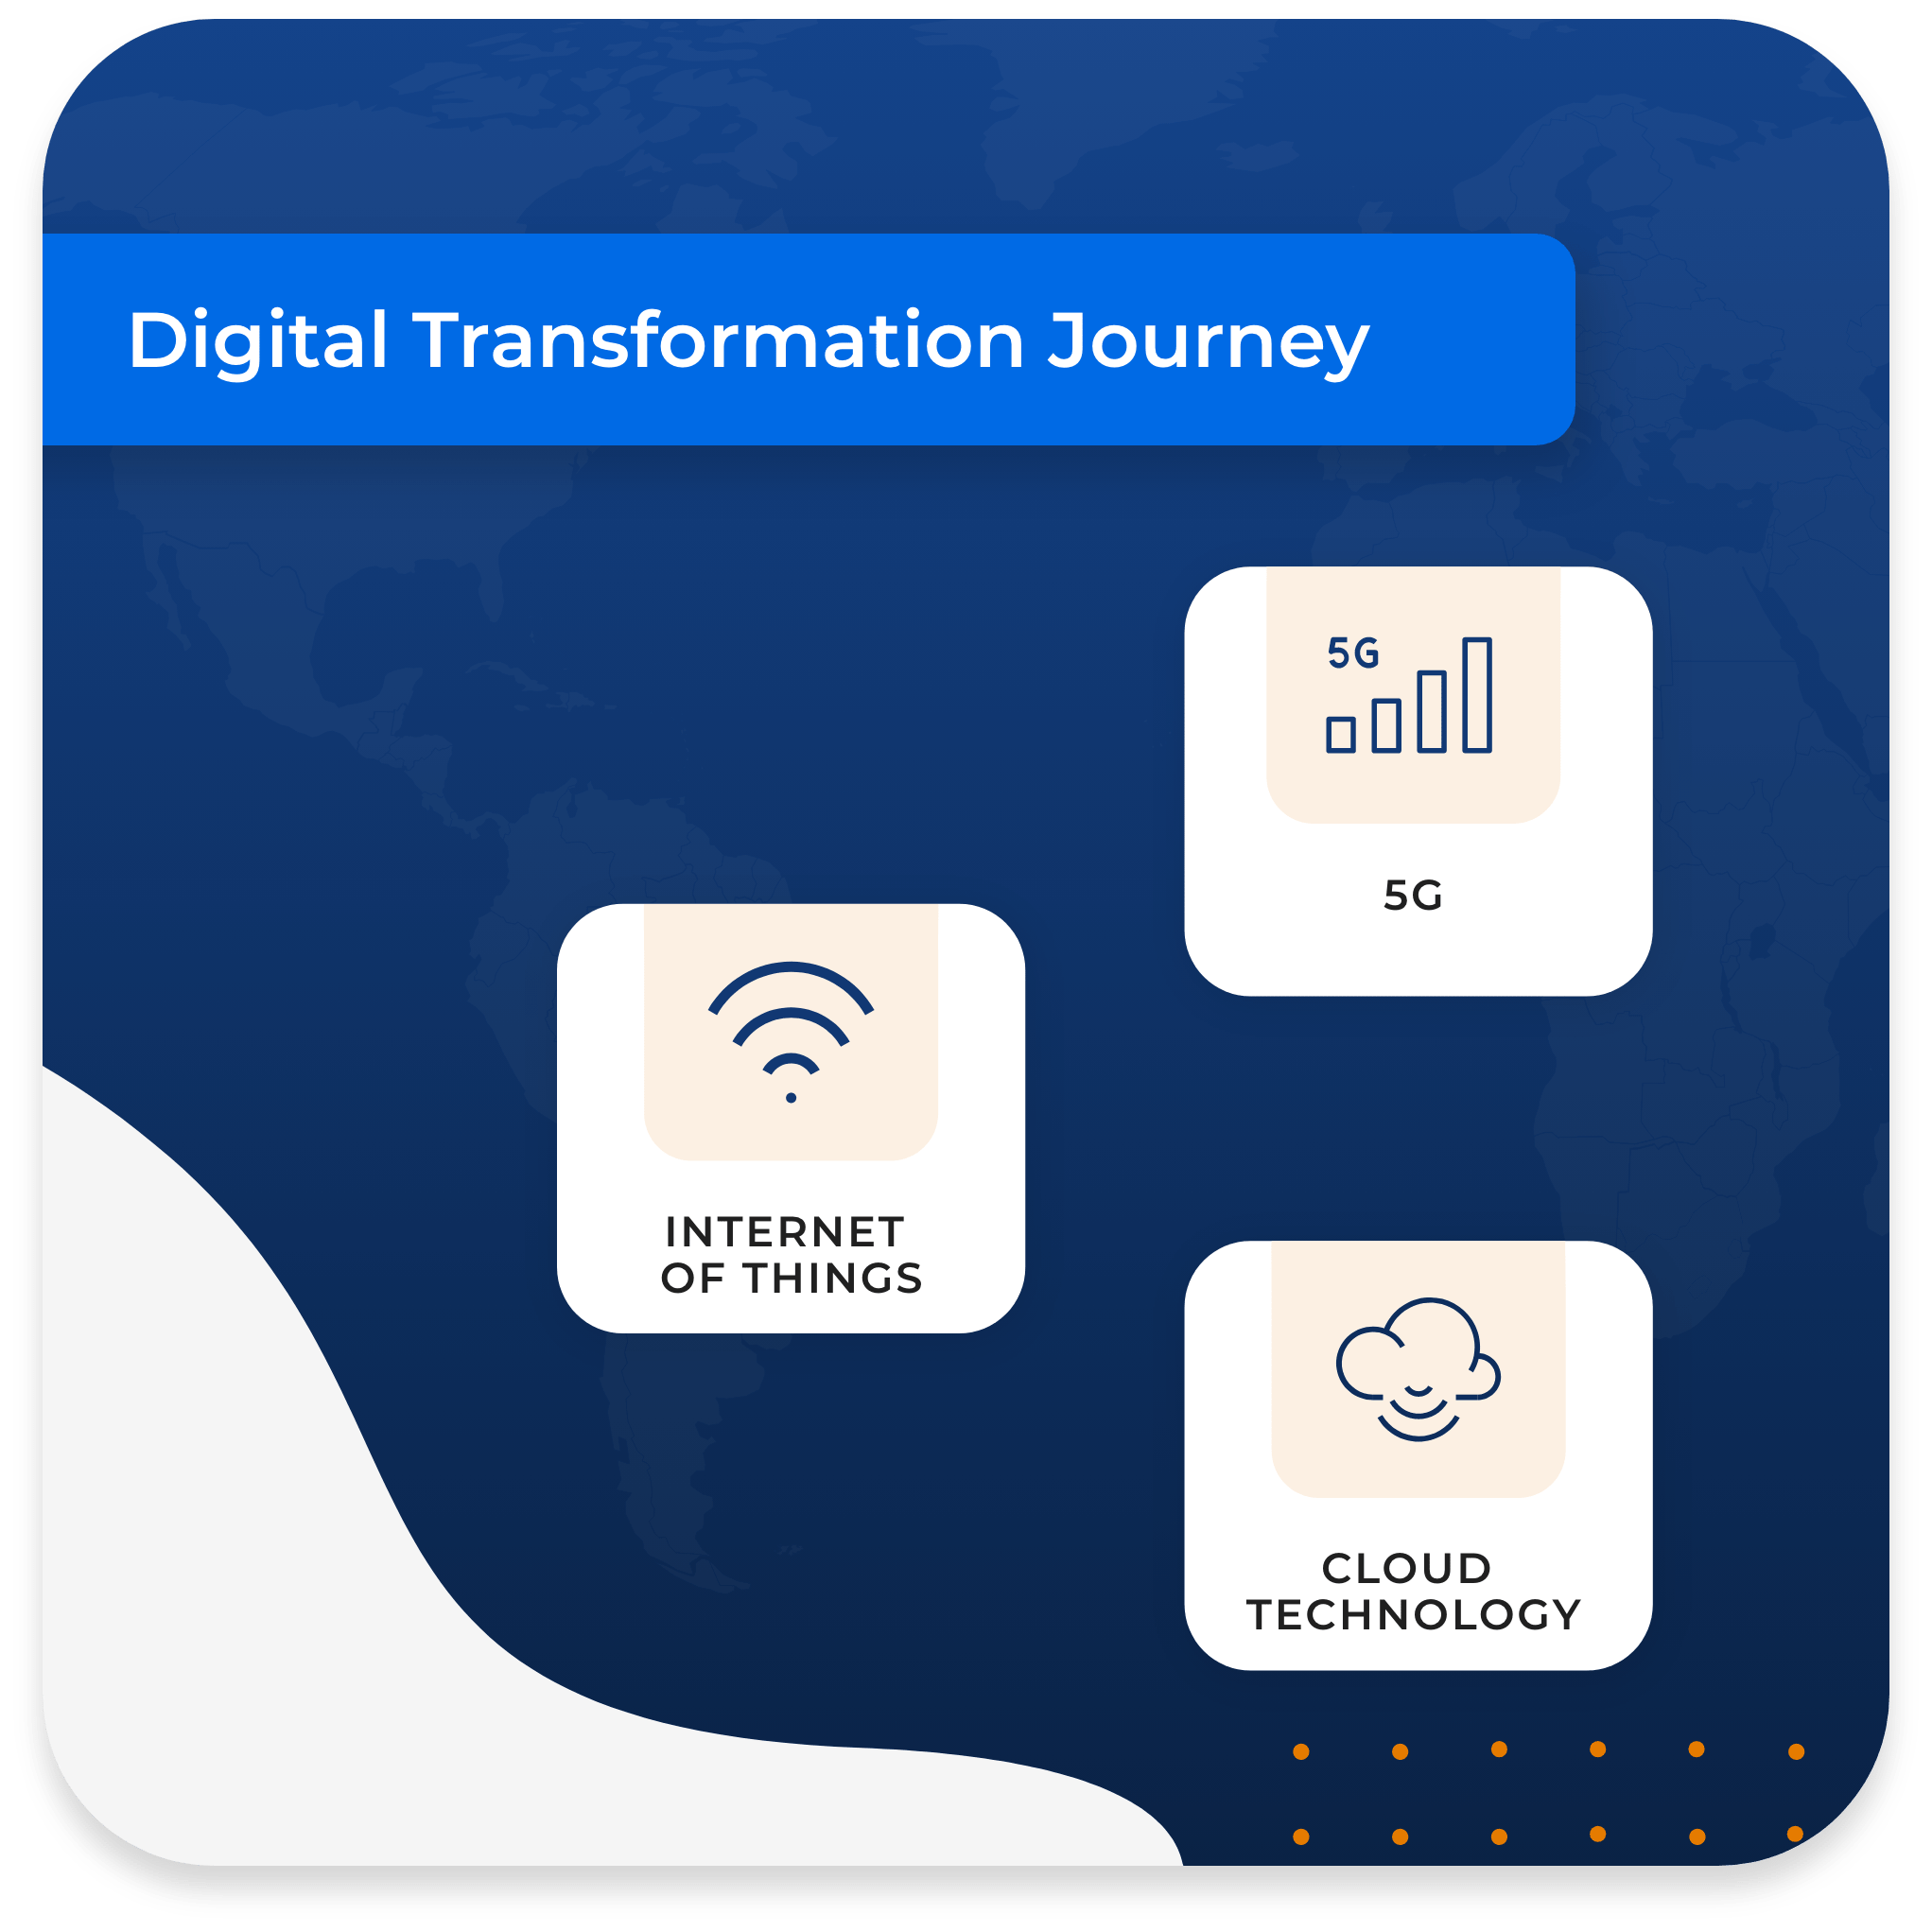 Digital transformation journey of telecoms